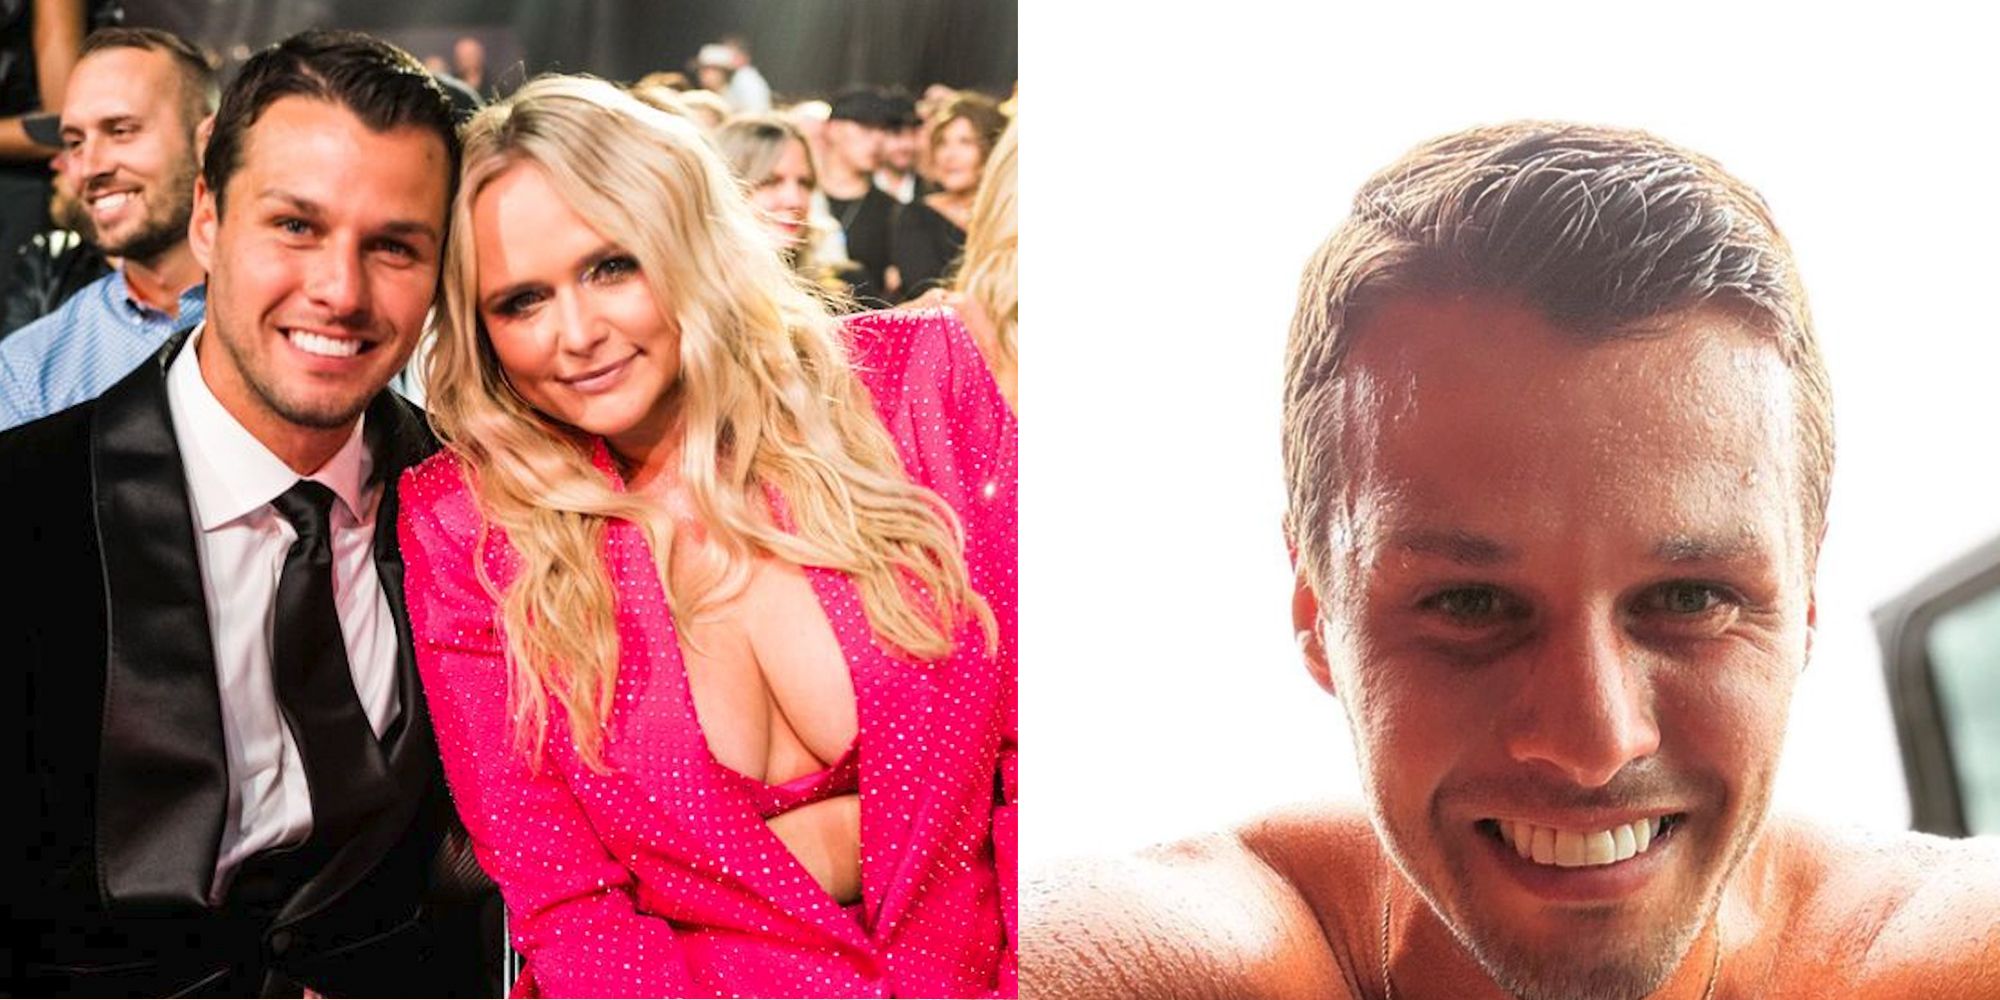 Fans Bombard Miranda Lambert's Husband After Seeing His Shirtless Photos